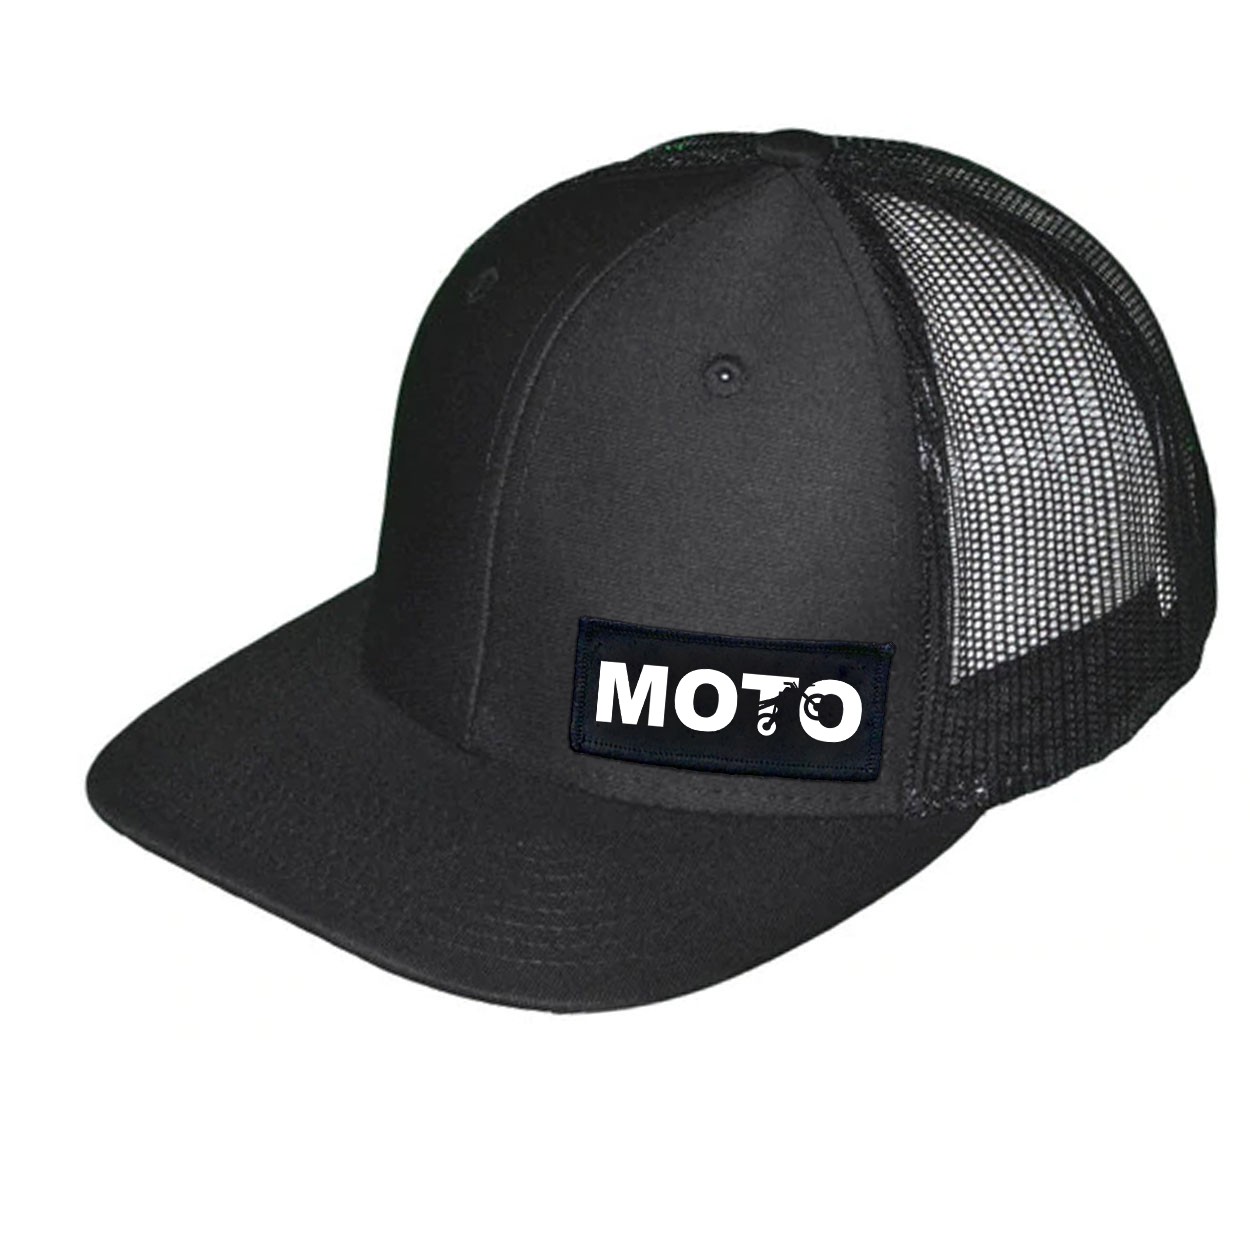 Moto Wheelie Logo Night Out Woven Patch Snapback Trucker Hat Black (White Logo)